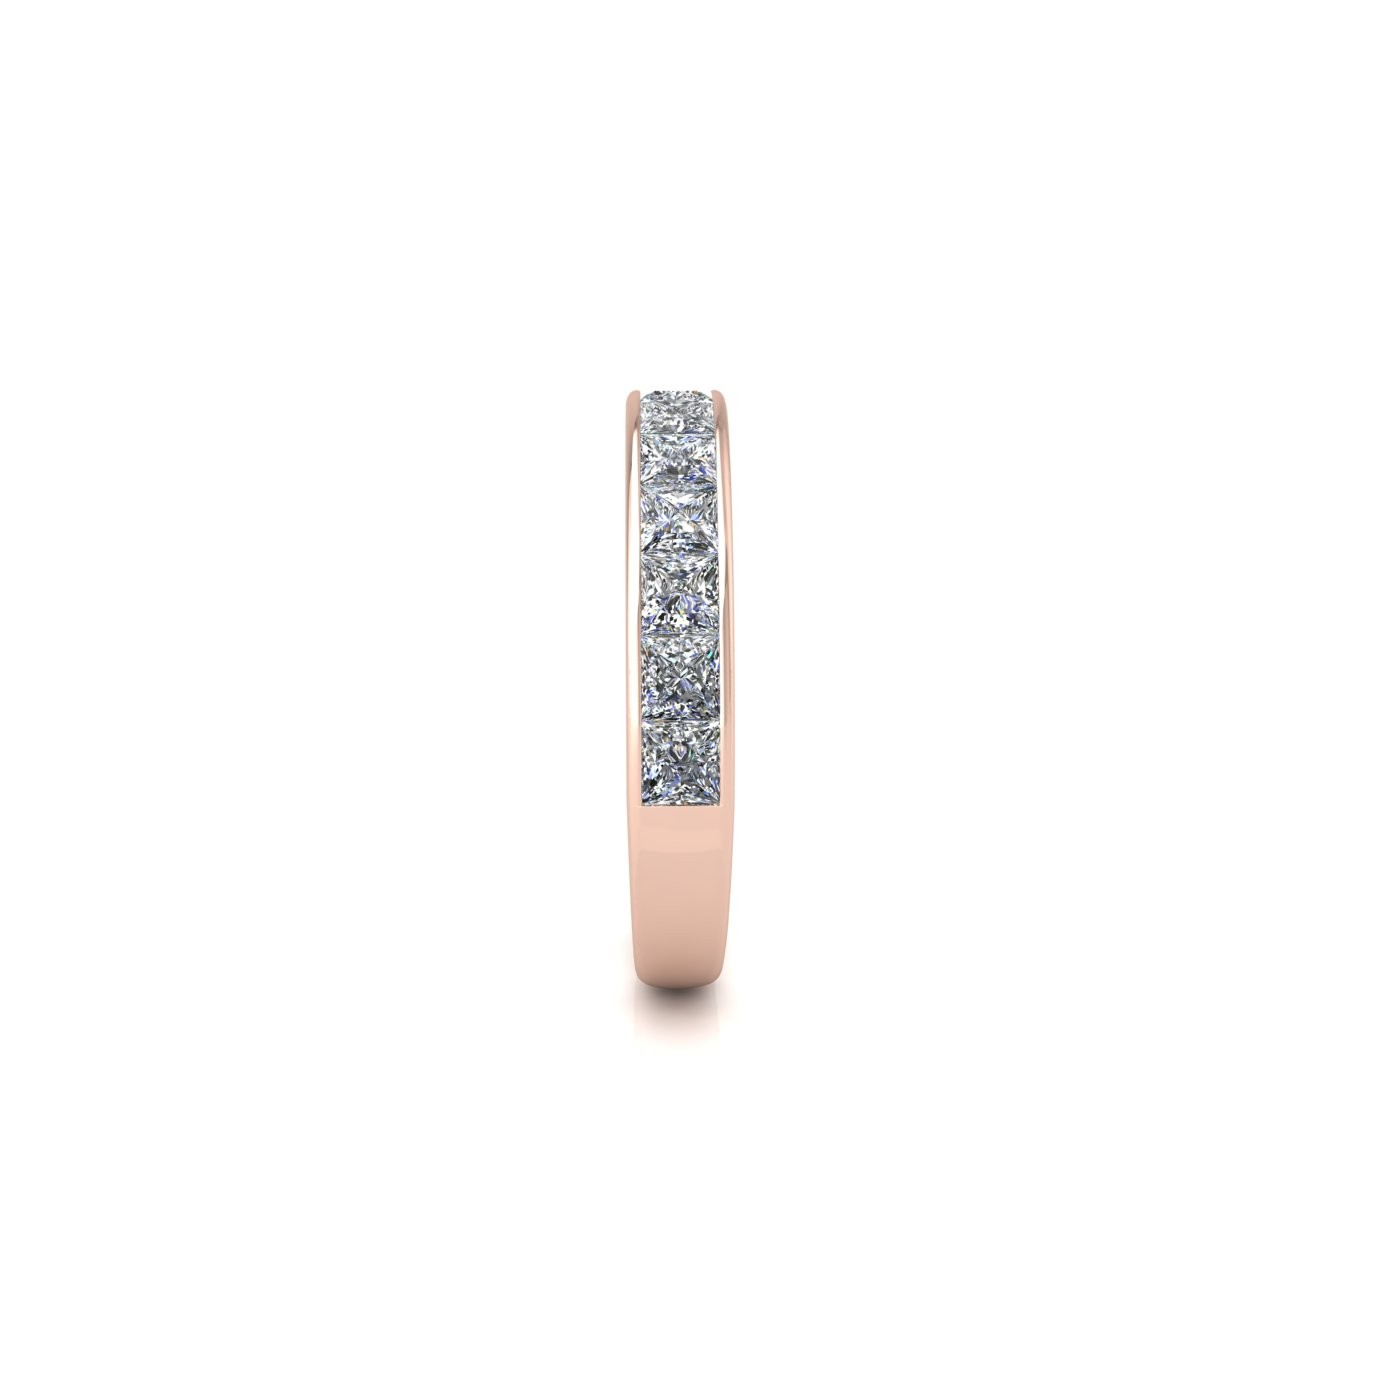 18k rose gold  princess shape diamond channel set half eternity ring